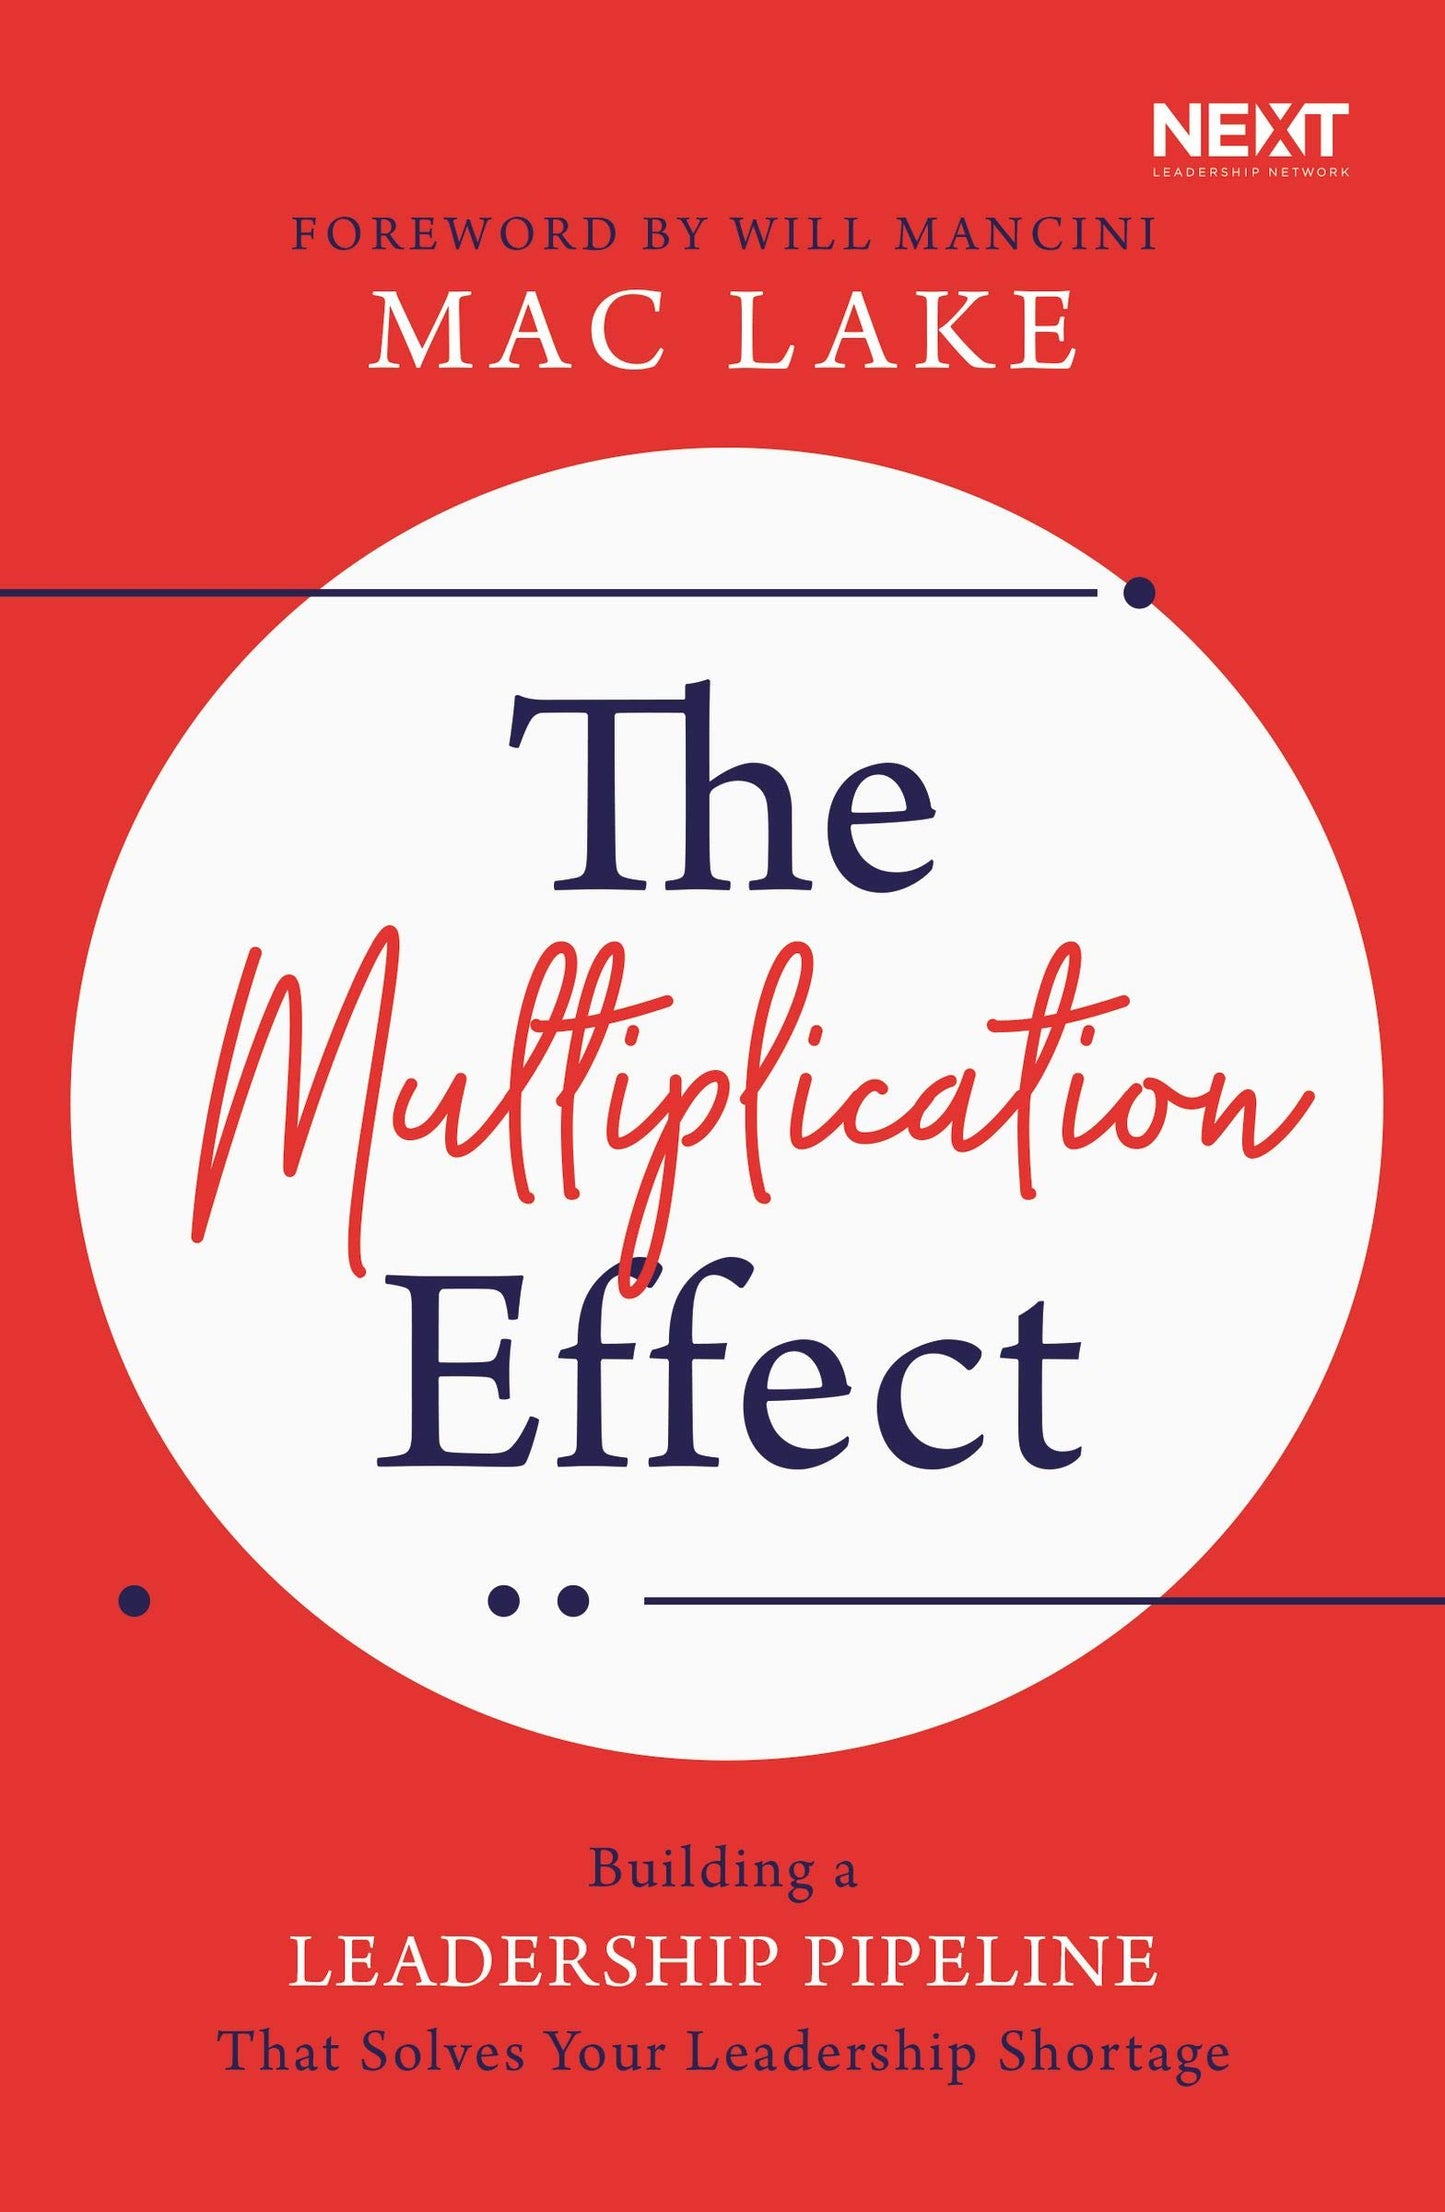 Multiplication Effect